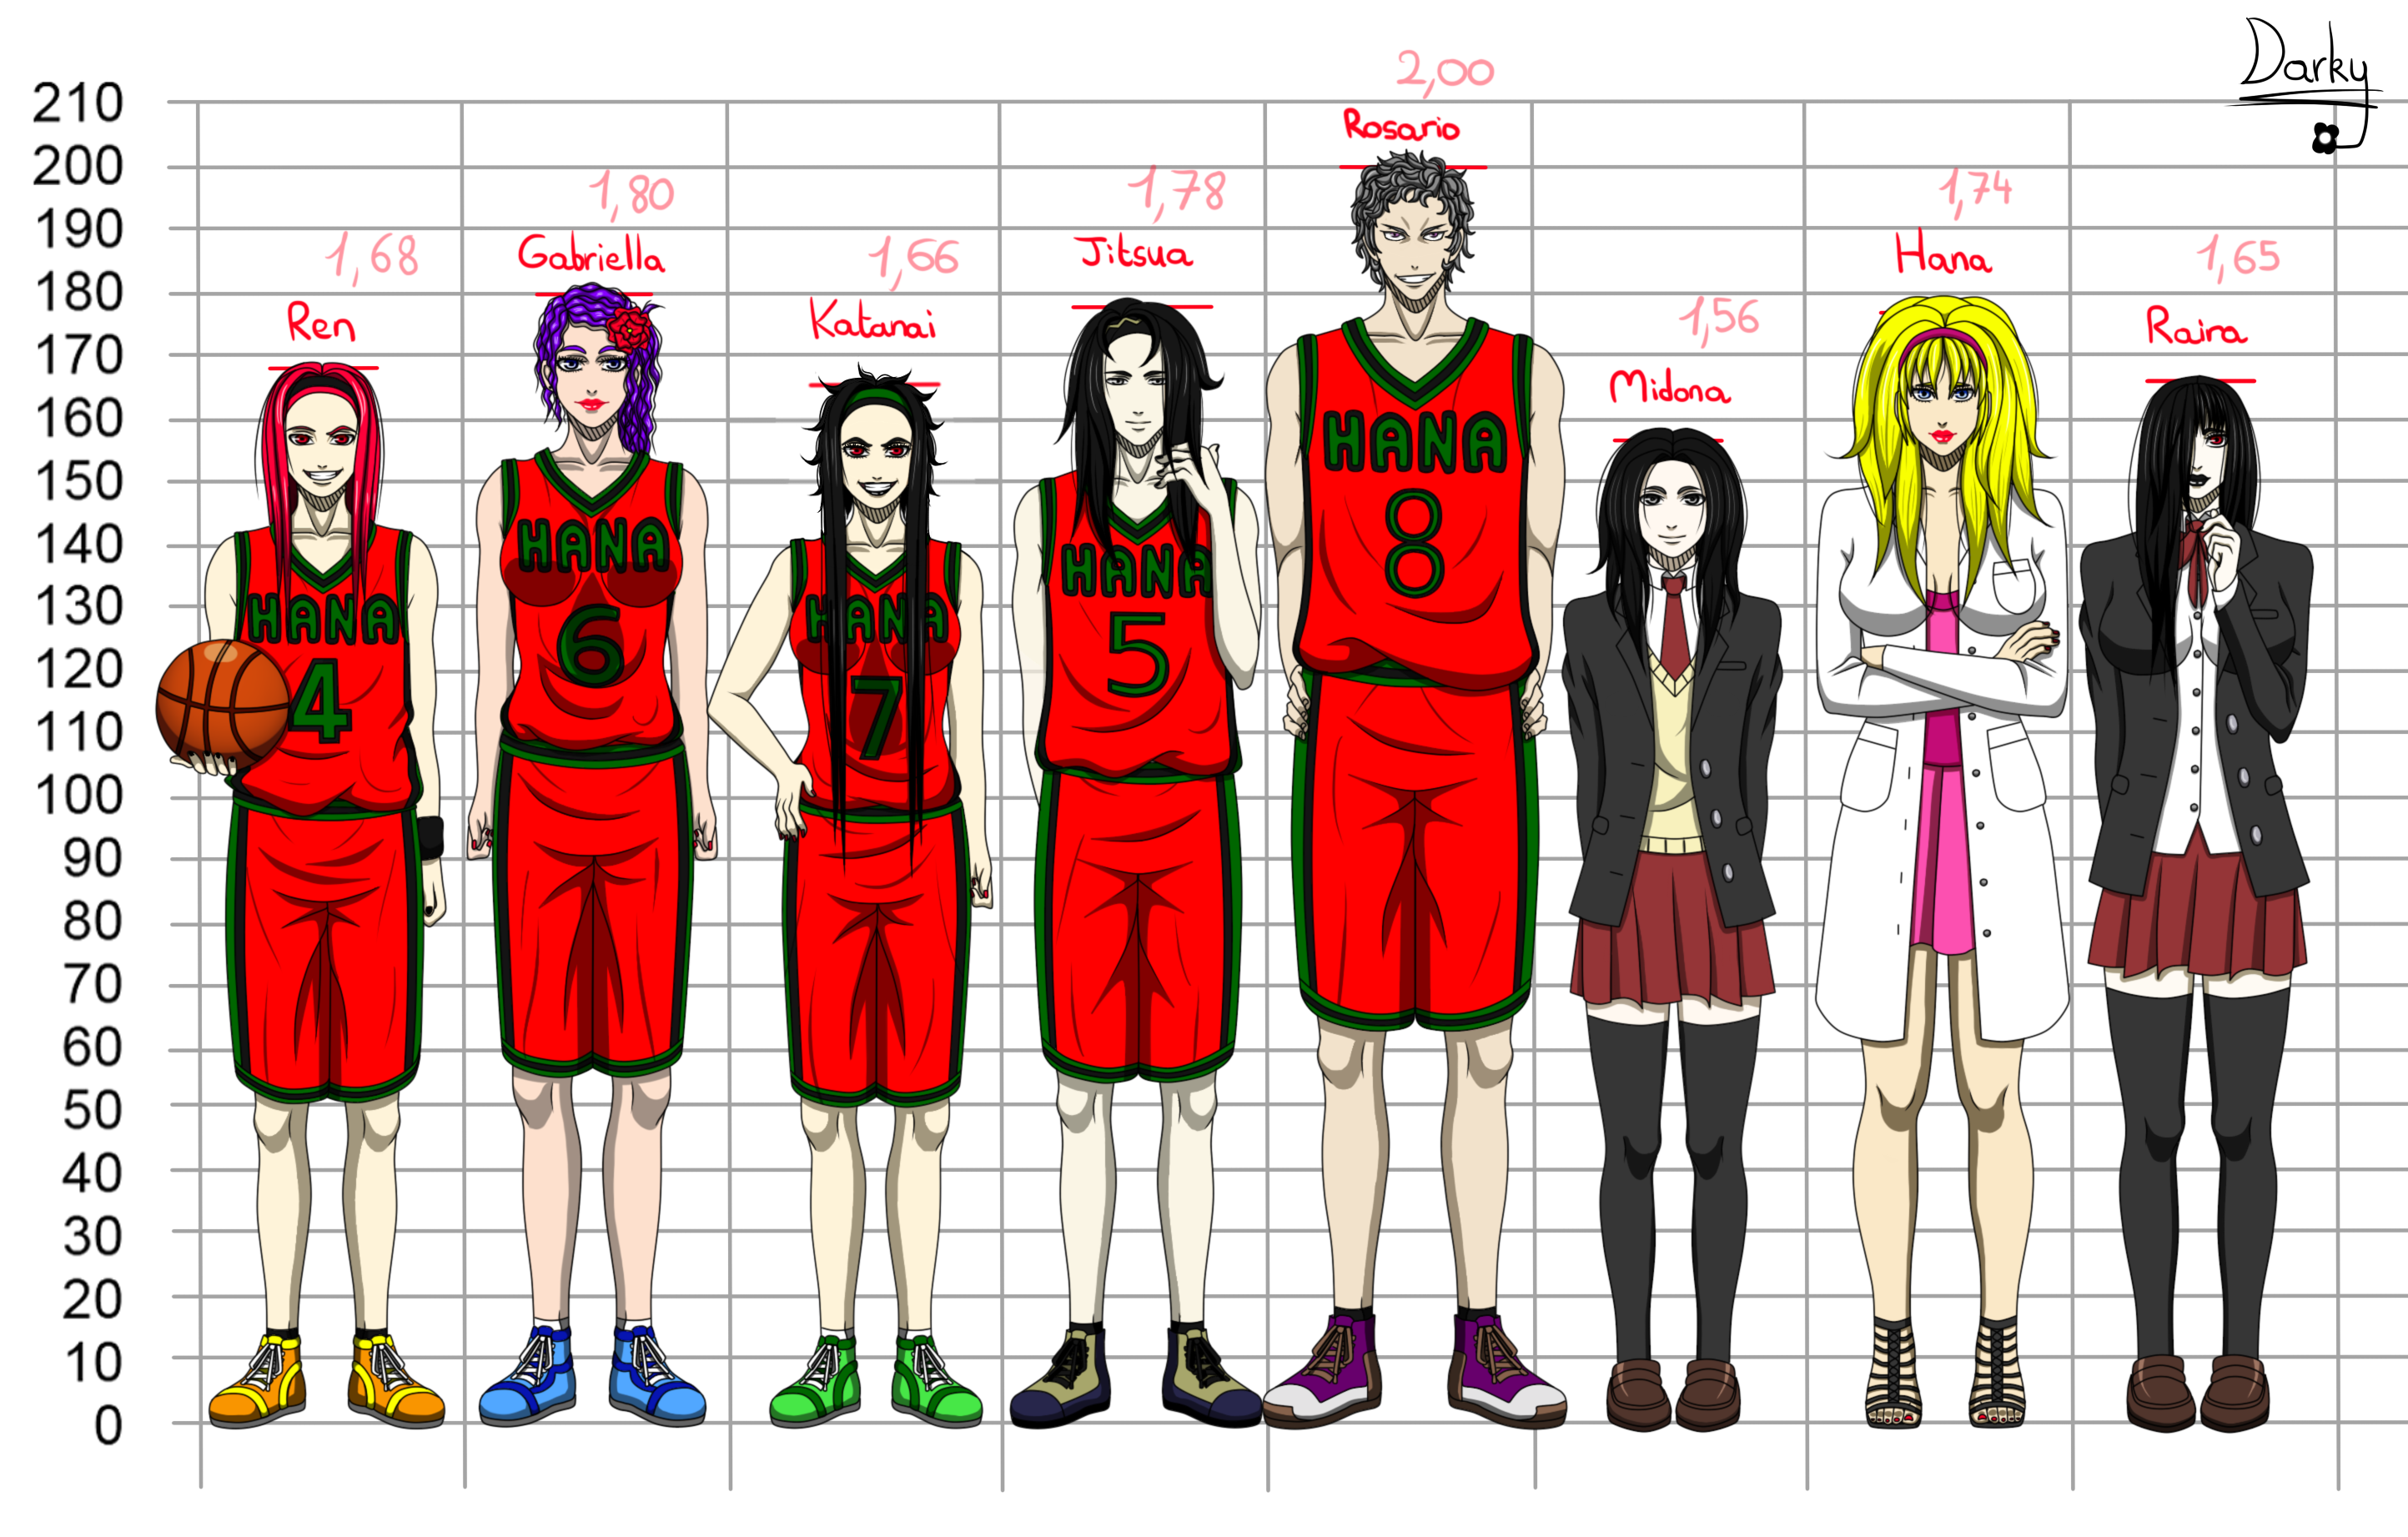 Height code. Рост персонажей баскетбол Куроко. Куроко персонажи рост. Рост персонажей баскетбол короко. Рост игроков баскетбол Куроко.